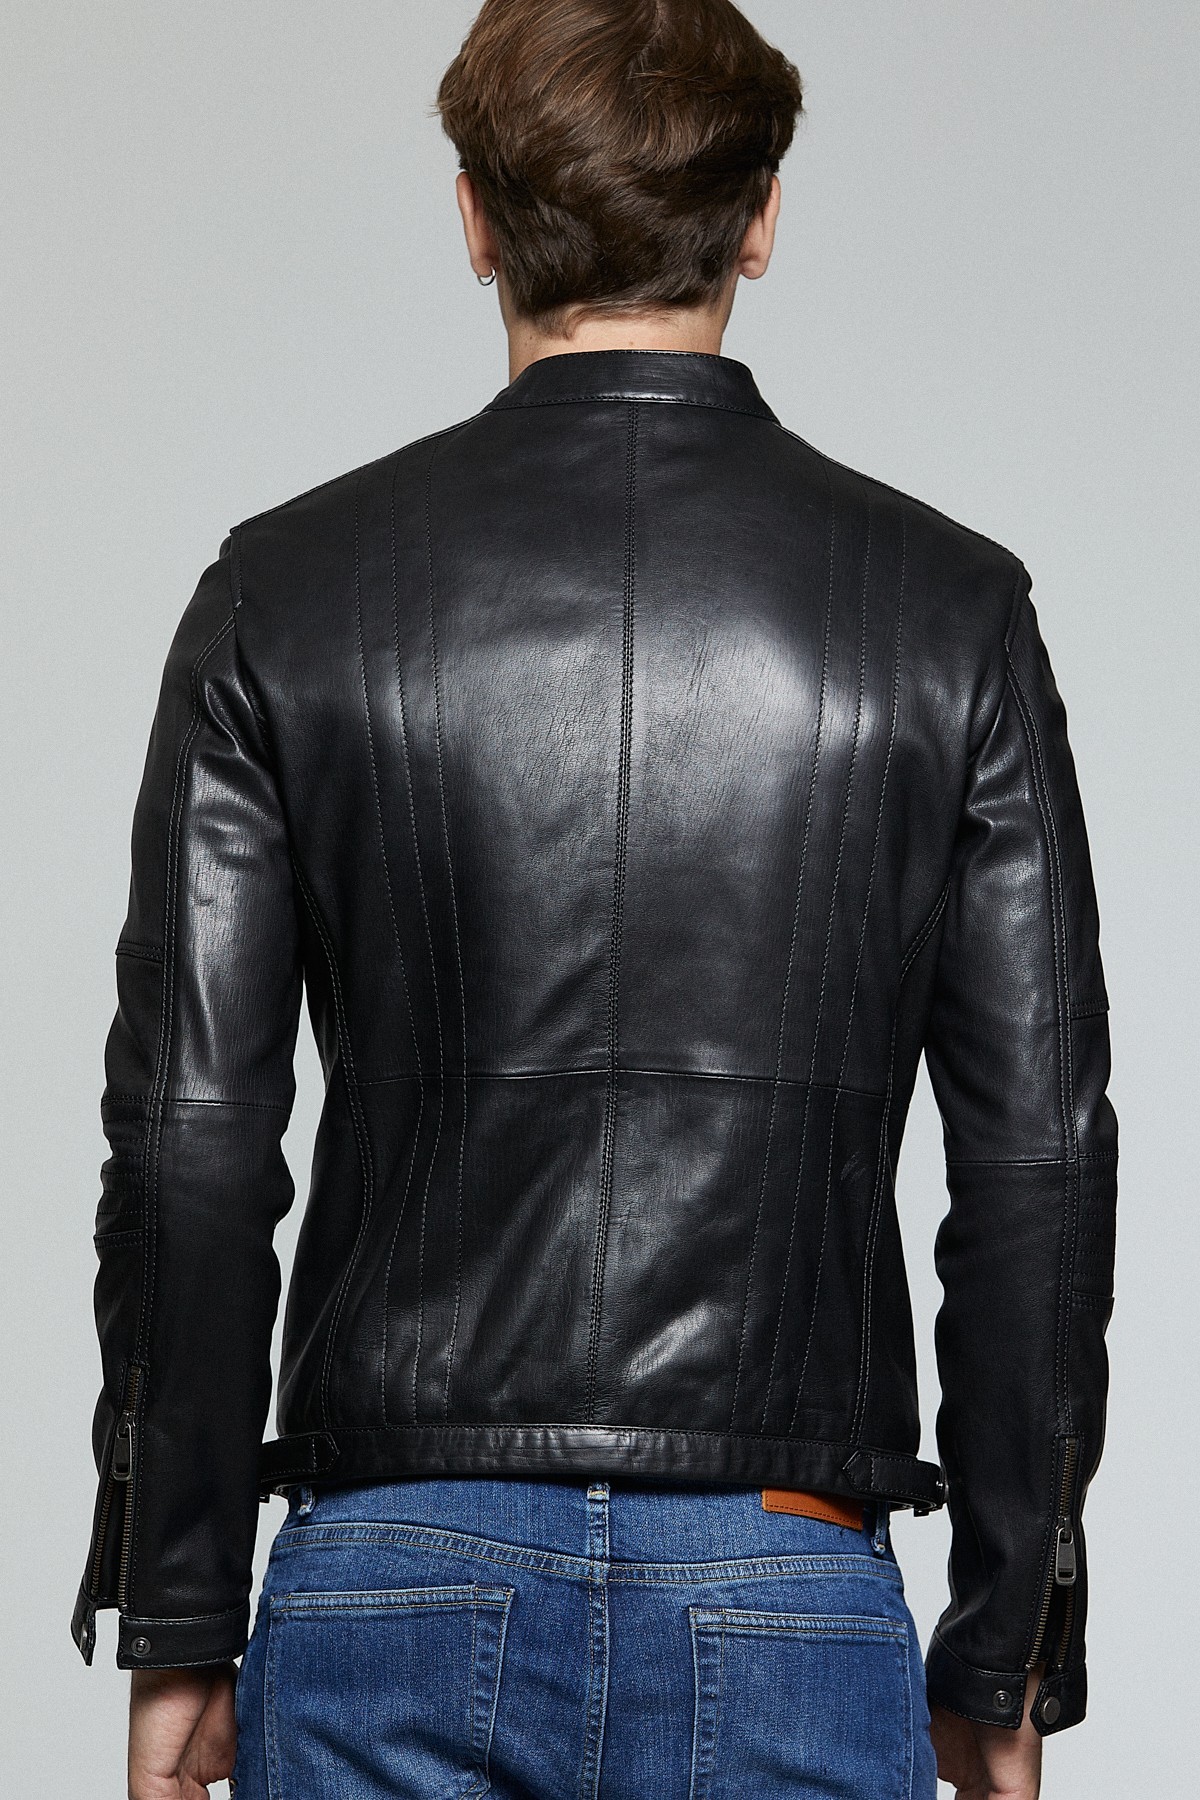 Black Leather Jacket for Men's | Casual Biker Style Jacket